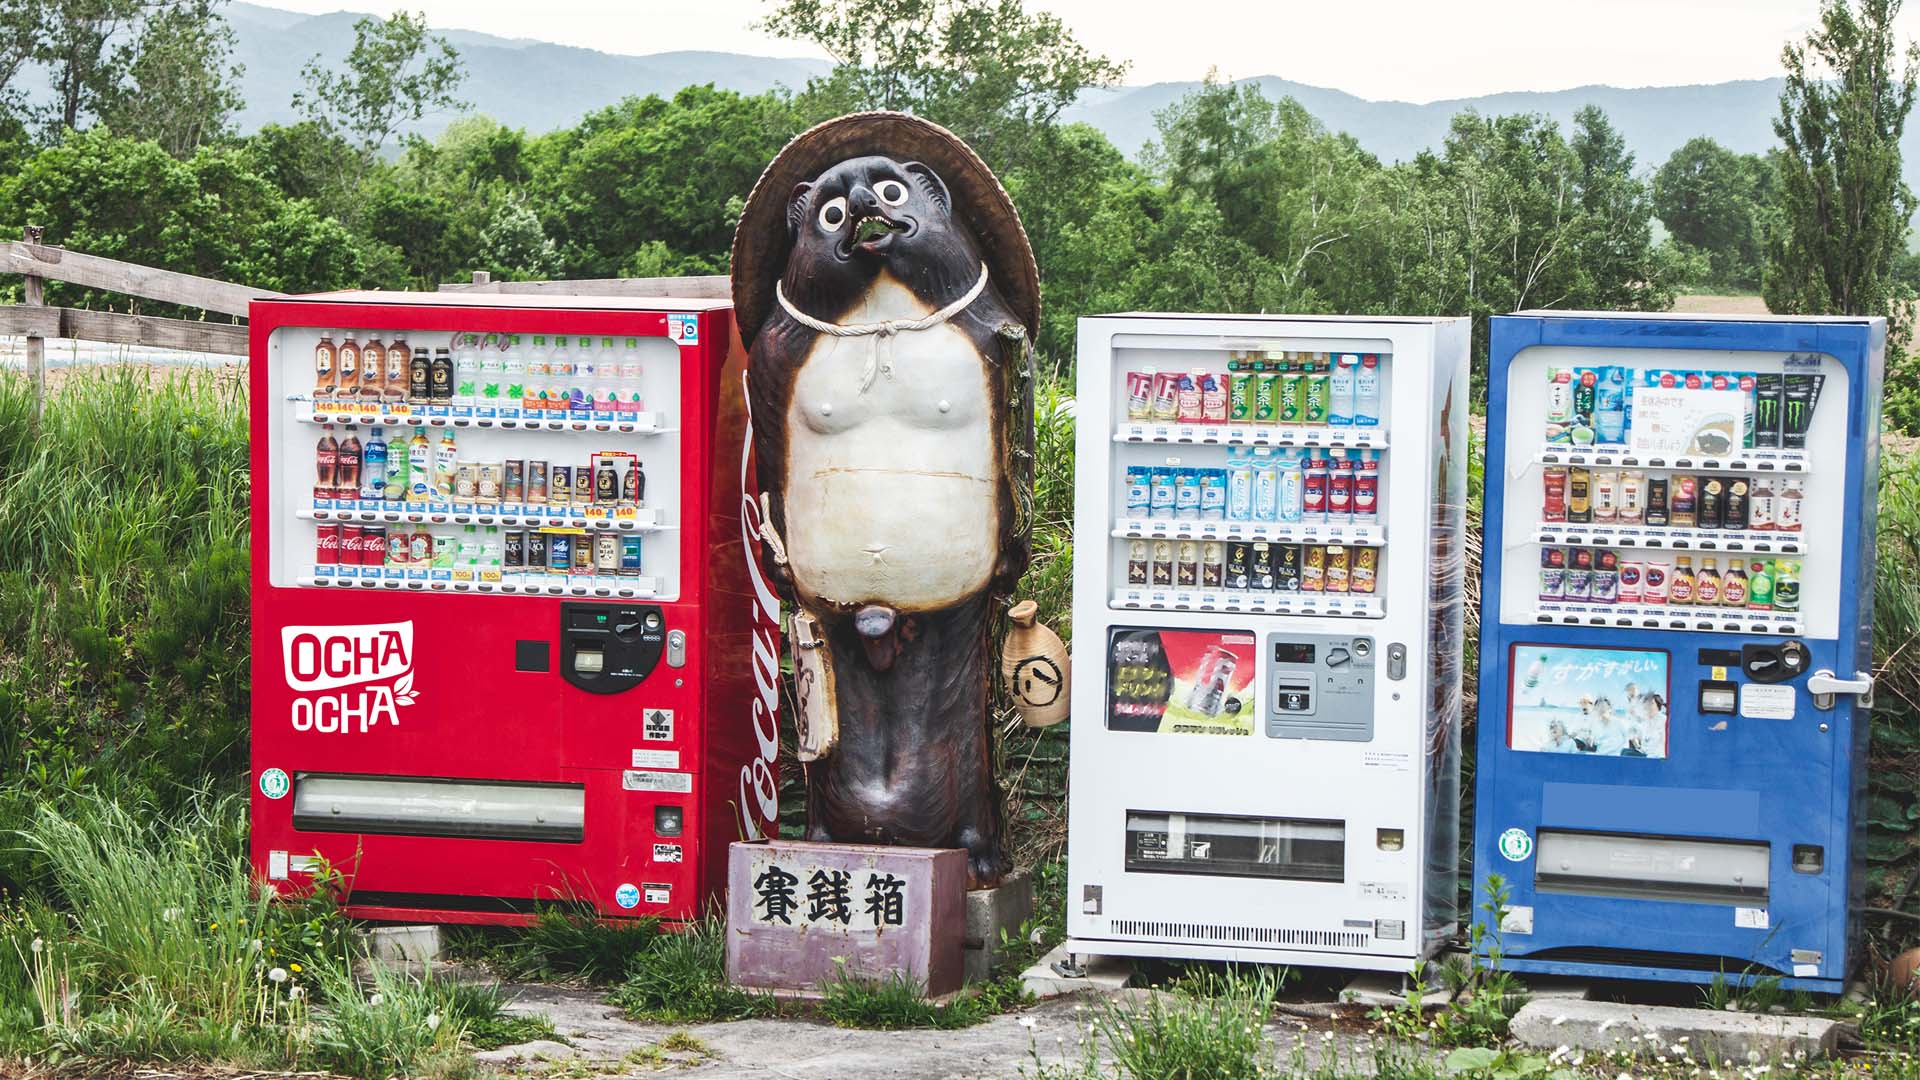 Getränkeautomat in Japan Hokkaido mit Ocha-Ocha Logo